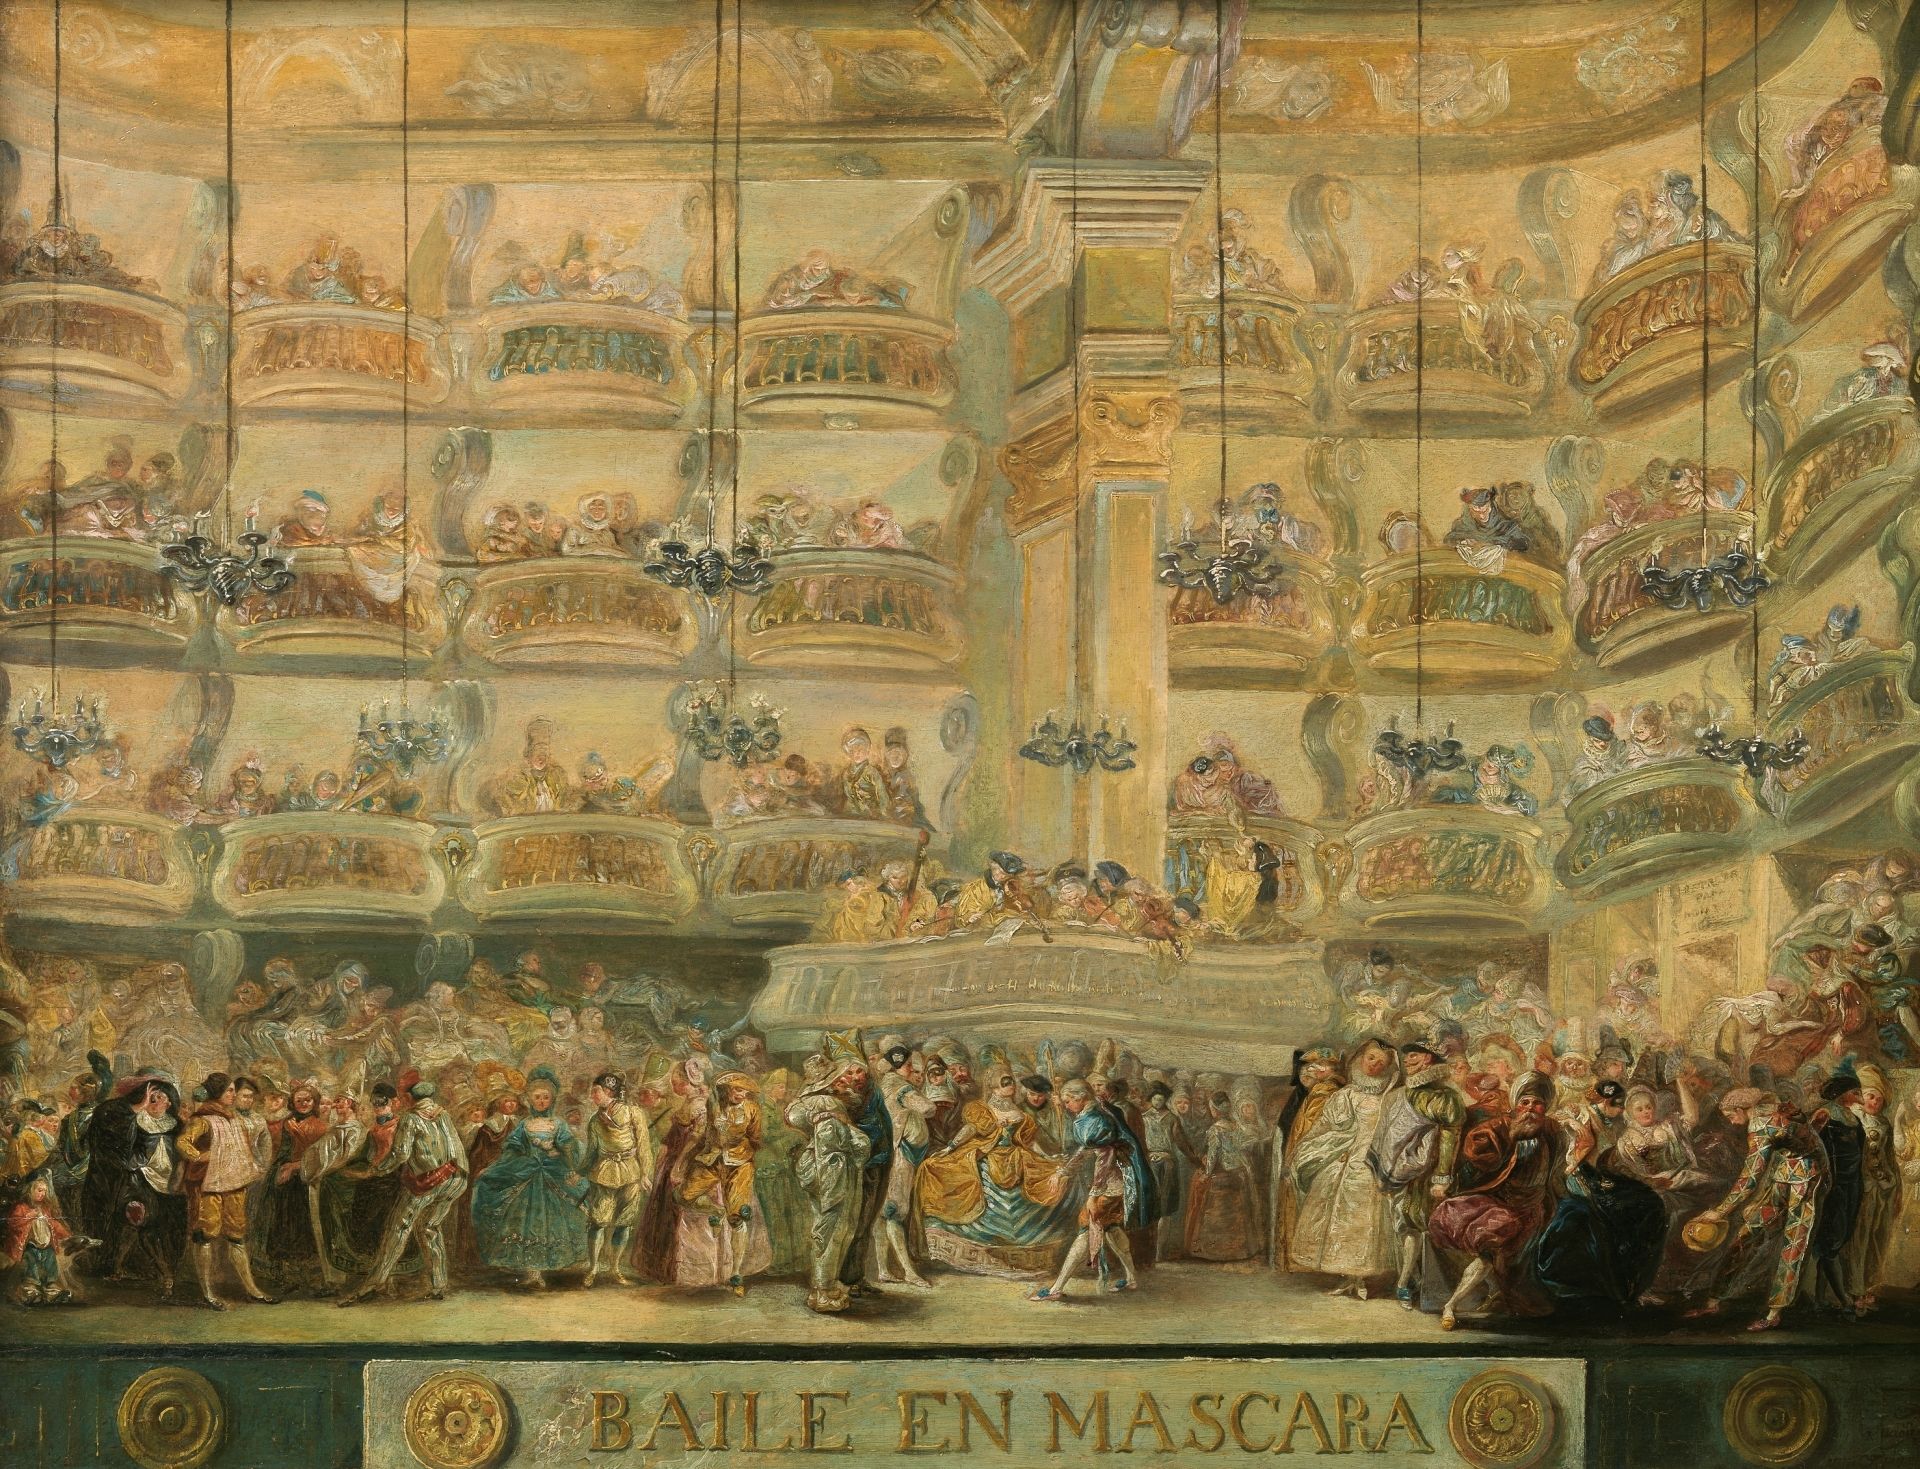 Organizar eventos por decreto: un baile de máscaras en 1767